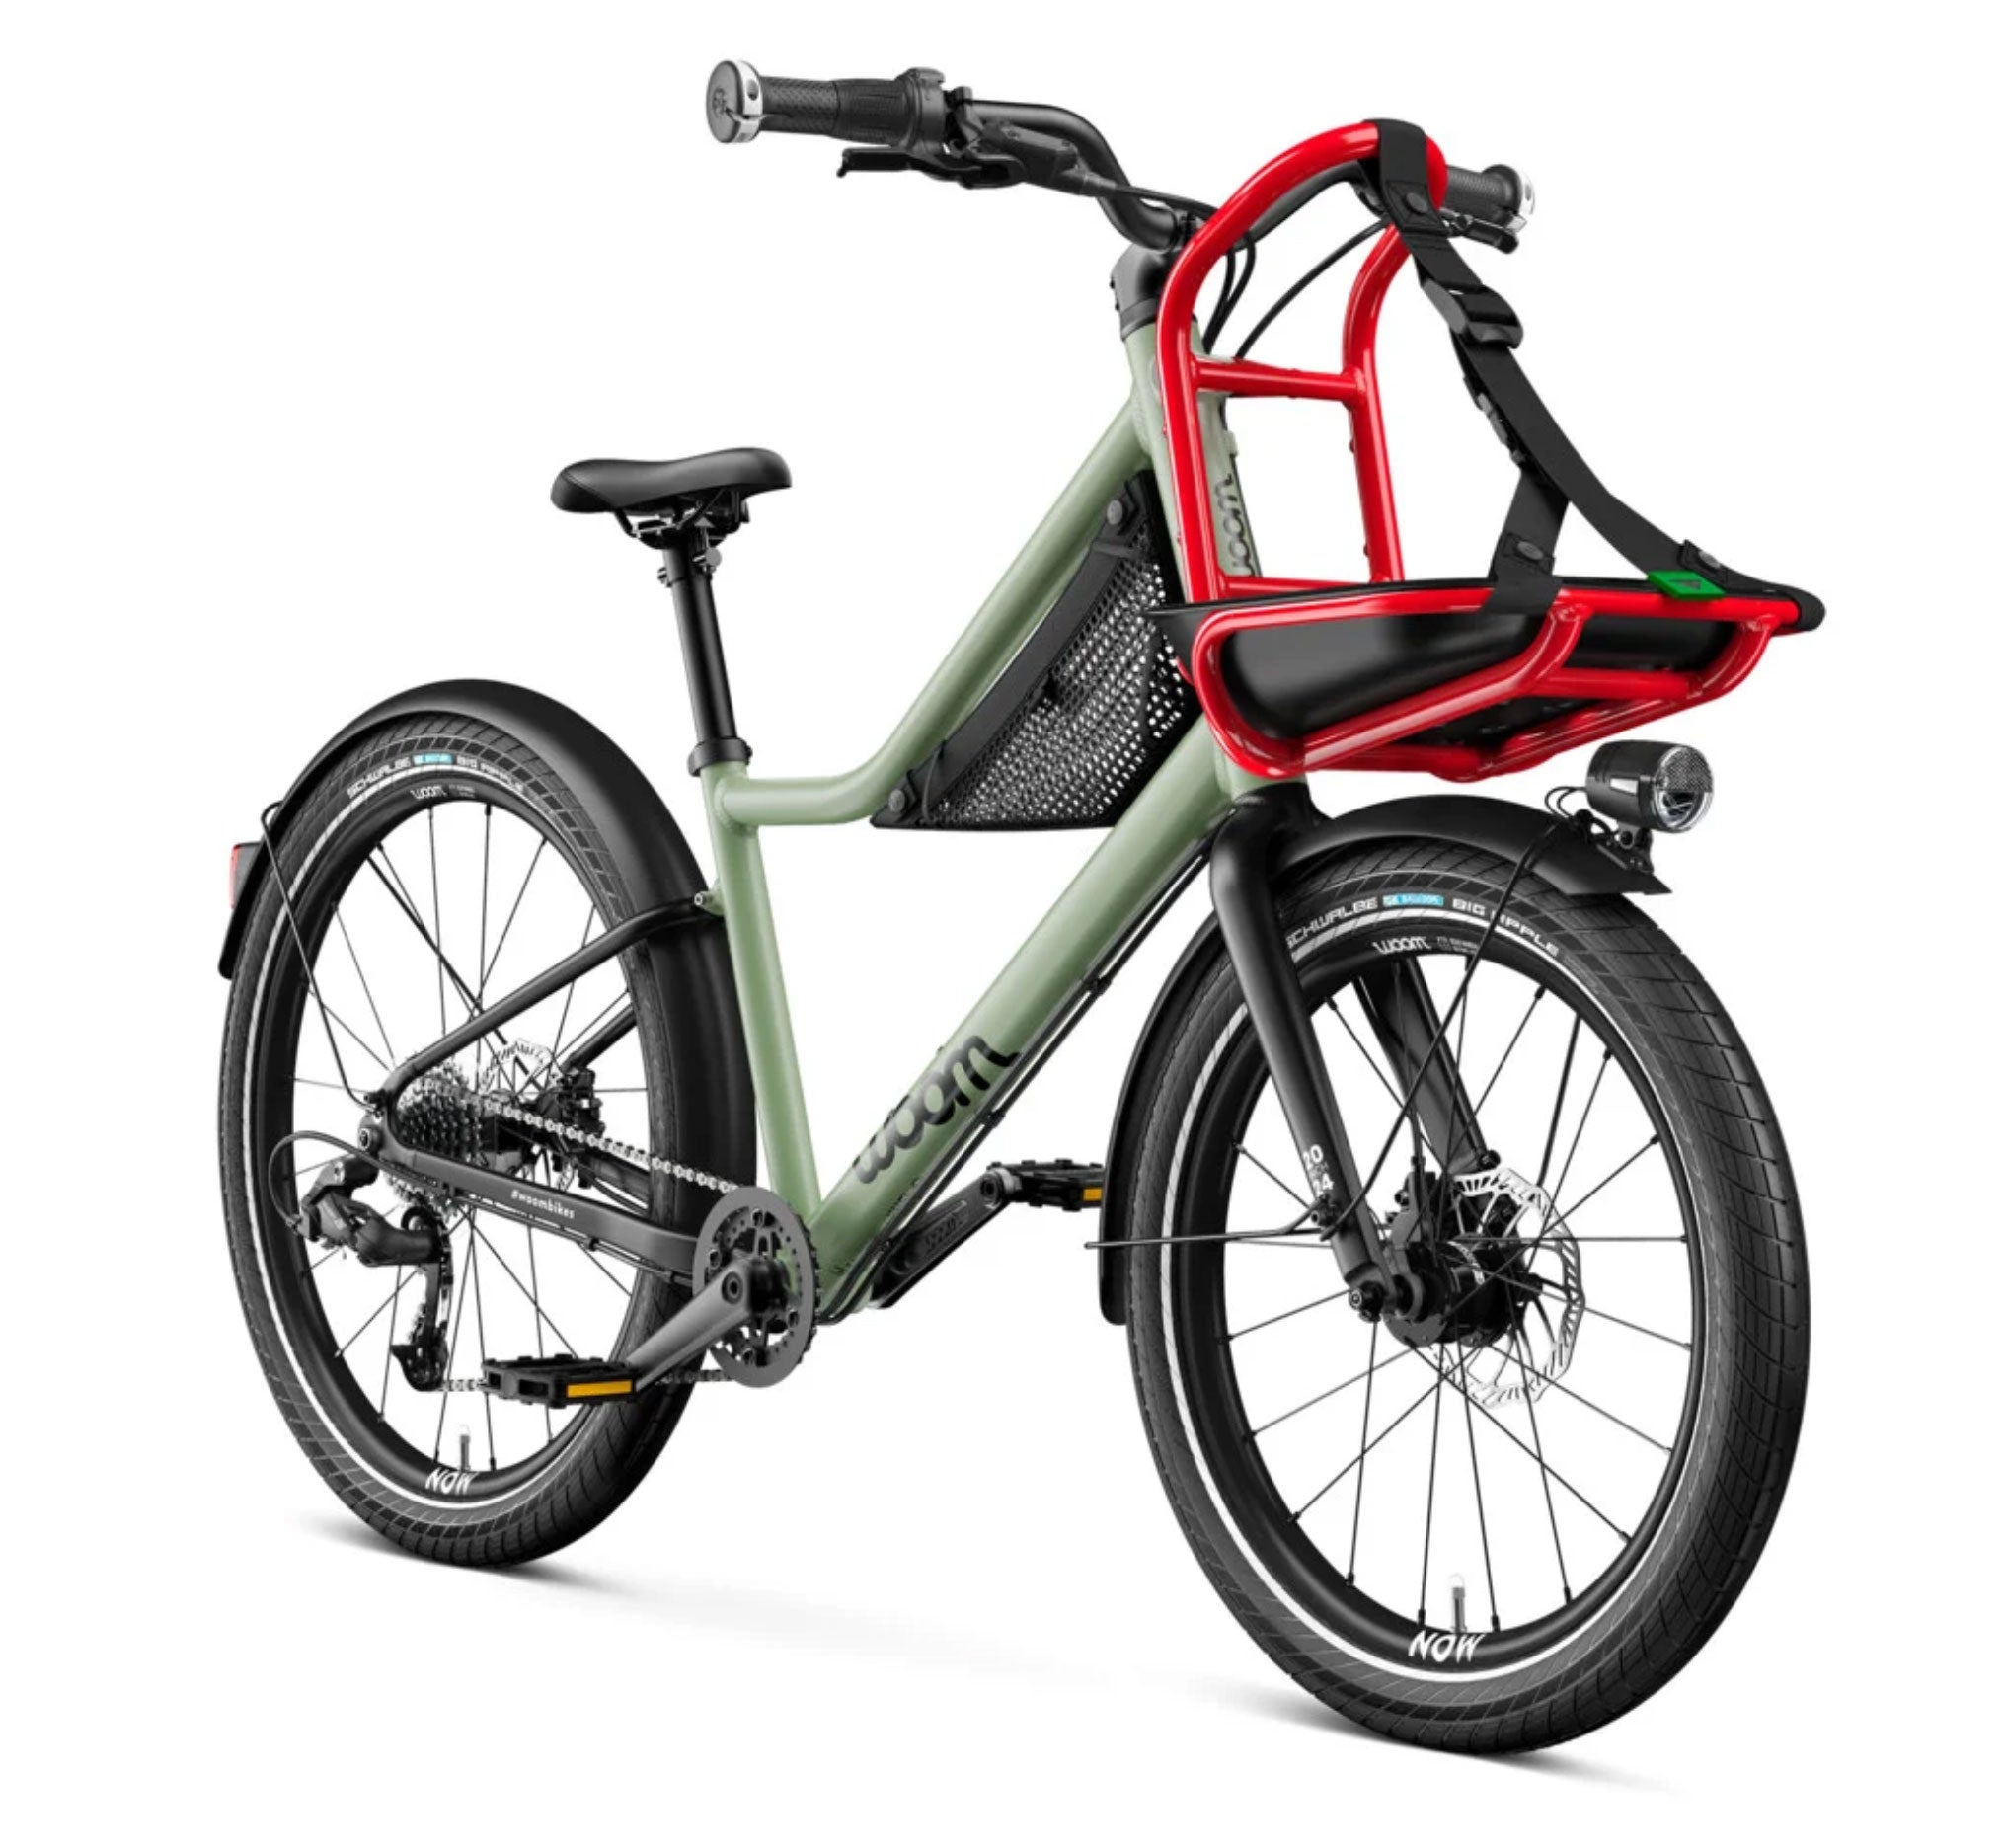 WOOM NOW 5 moss green / formular red - Premium Bikeshop